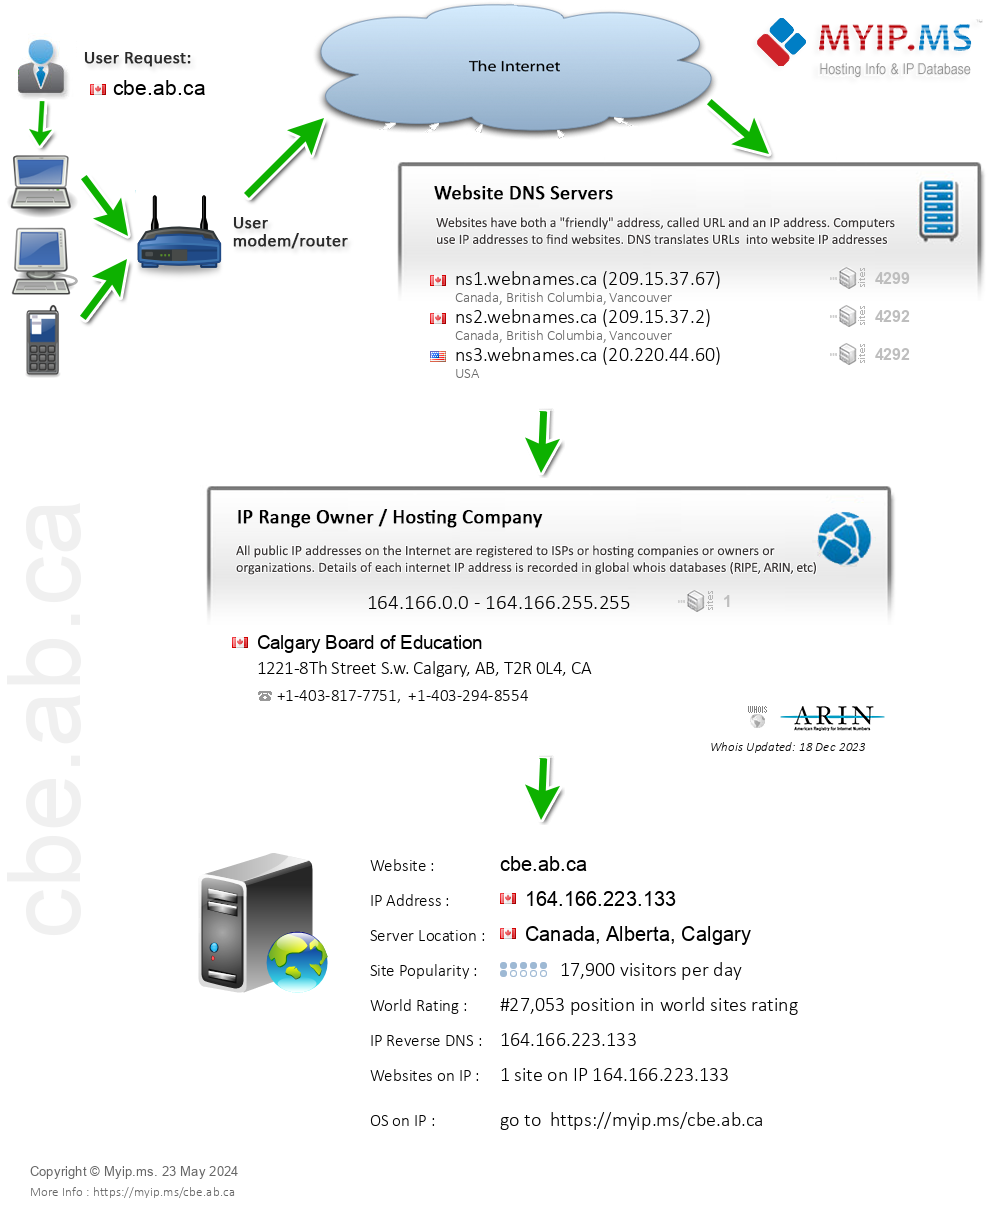 Cbe.ab.ca - Website Hosting Visual IP Diagram